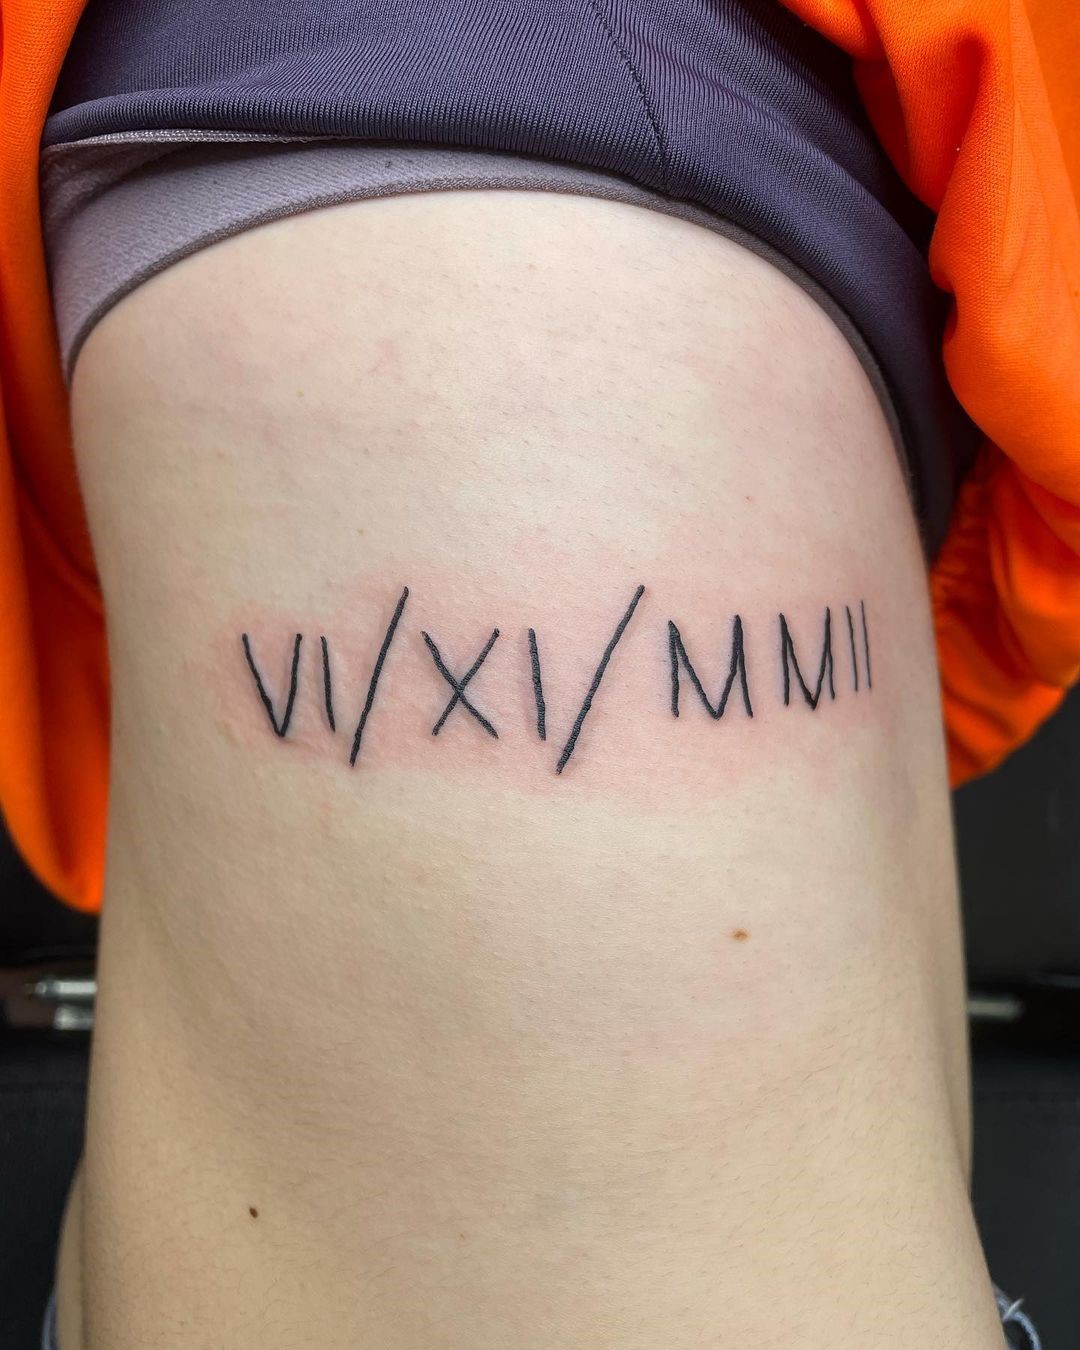 Share 96 about roman numerals tattoo wrist latest  indaotaonec